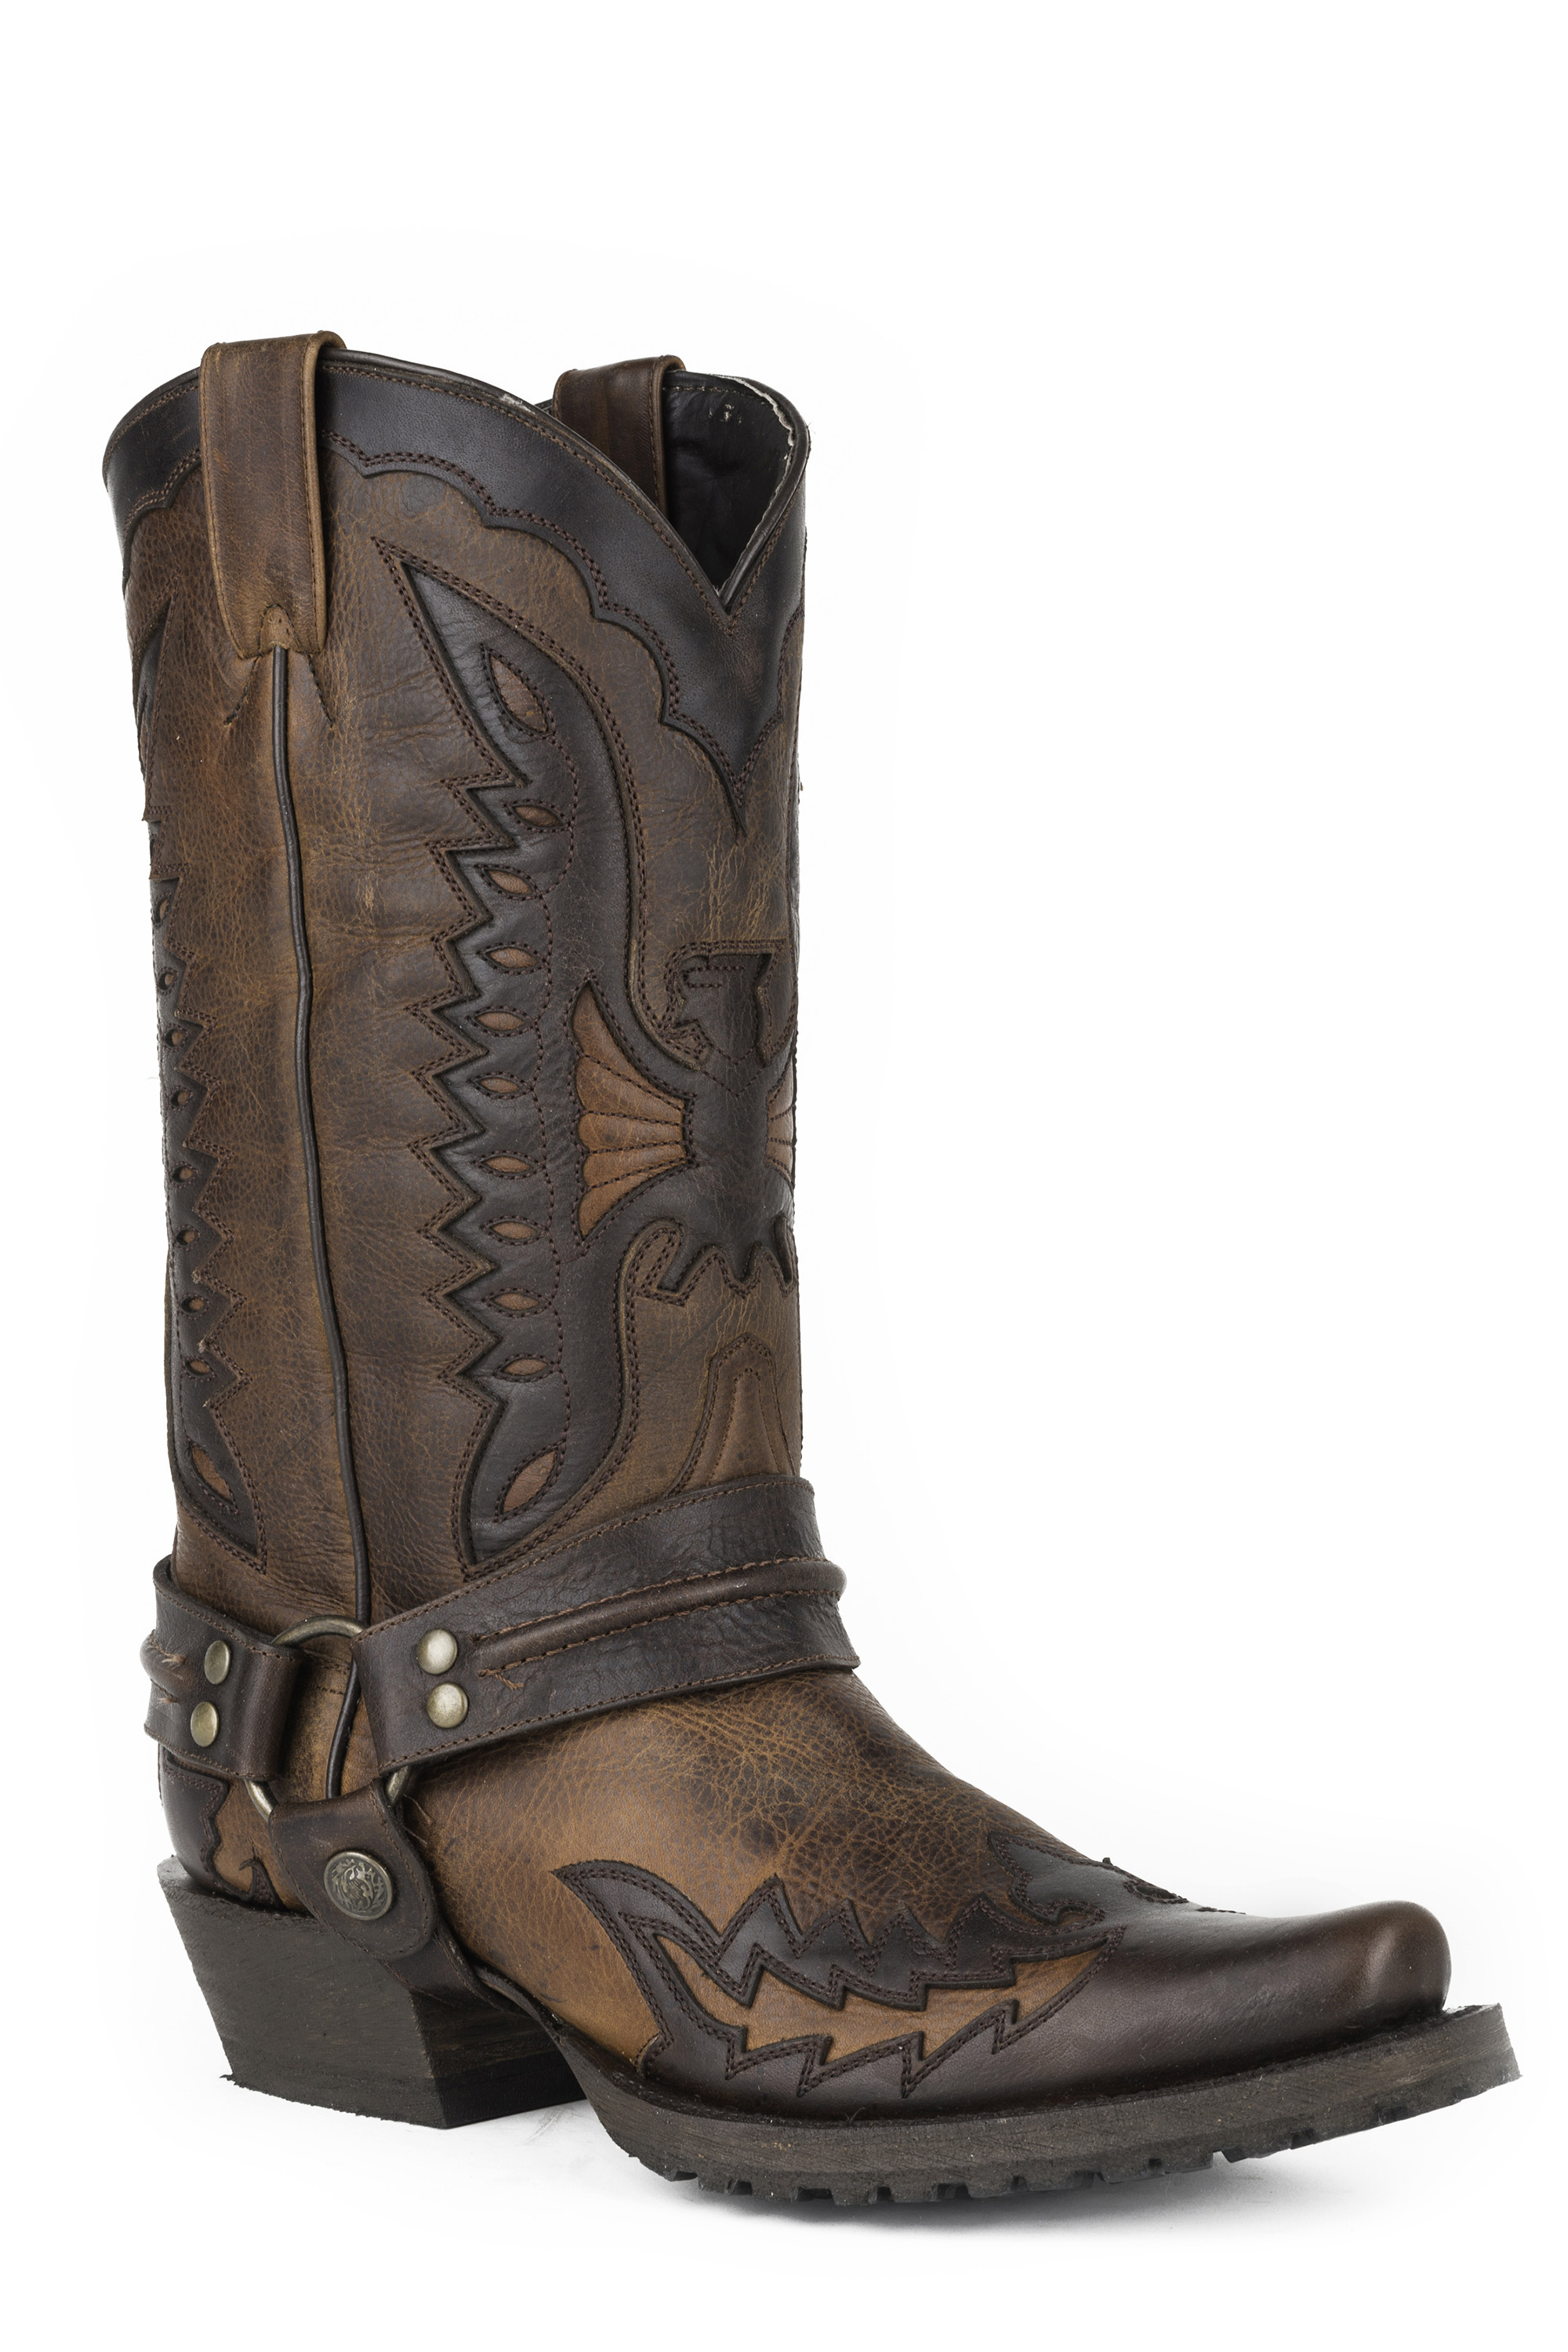 Stetson Men's EAGLE WINGTIP HARNESS Cowboy Boots-Brown